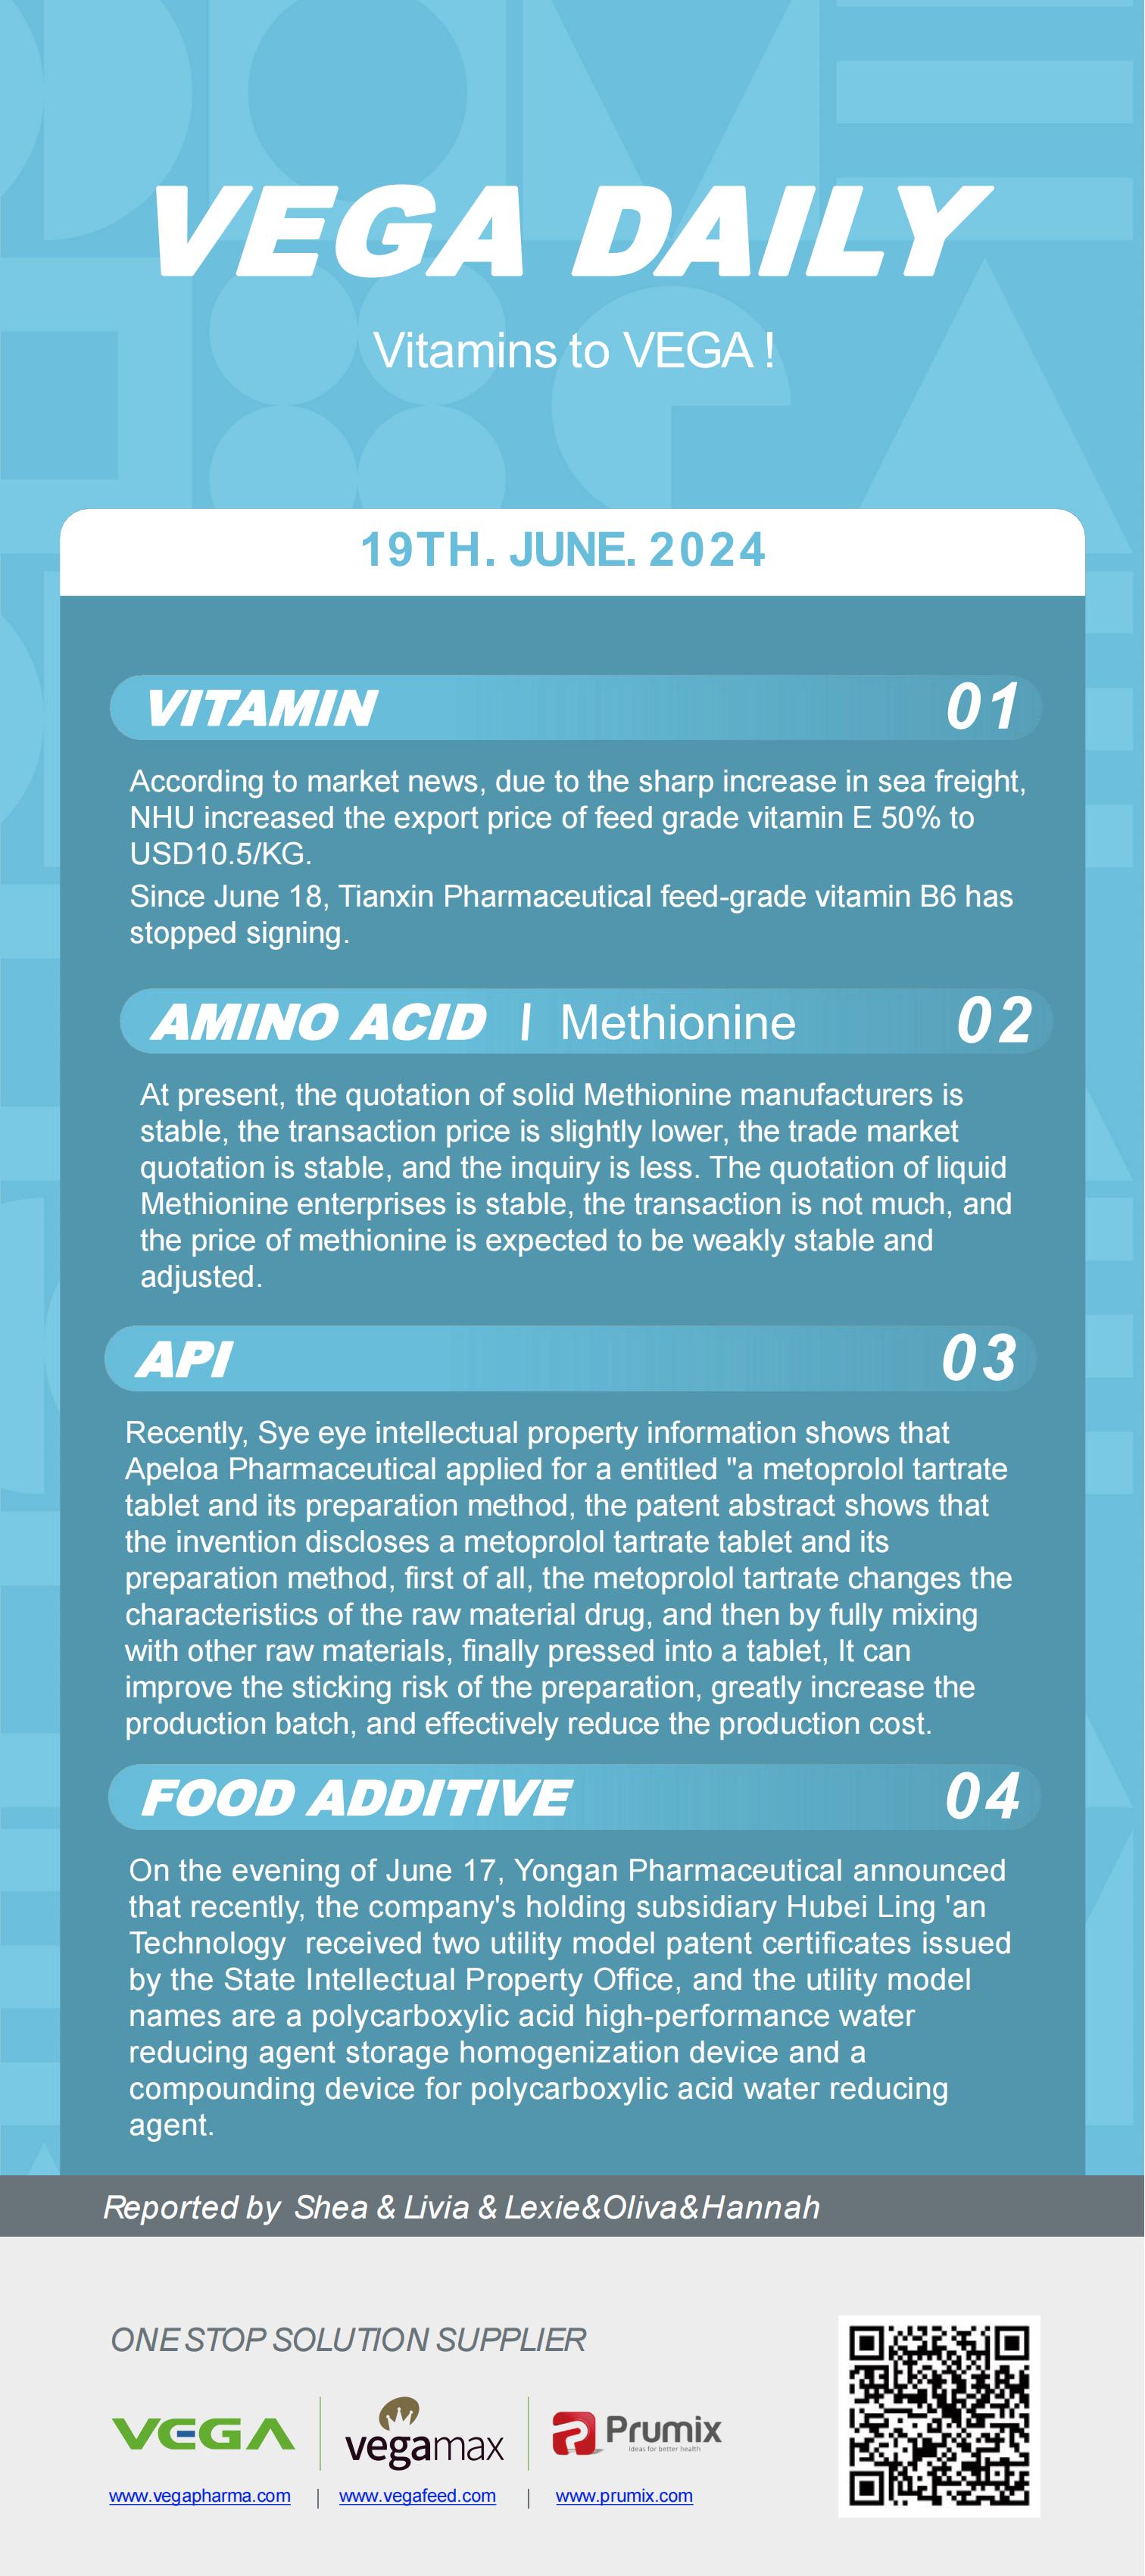 Vega Daily Dated on Jun 19th 2024 Vitamin Amino Acid APl Food Additives.jpg